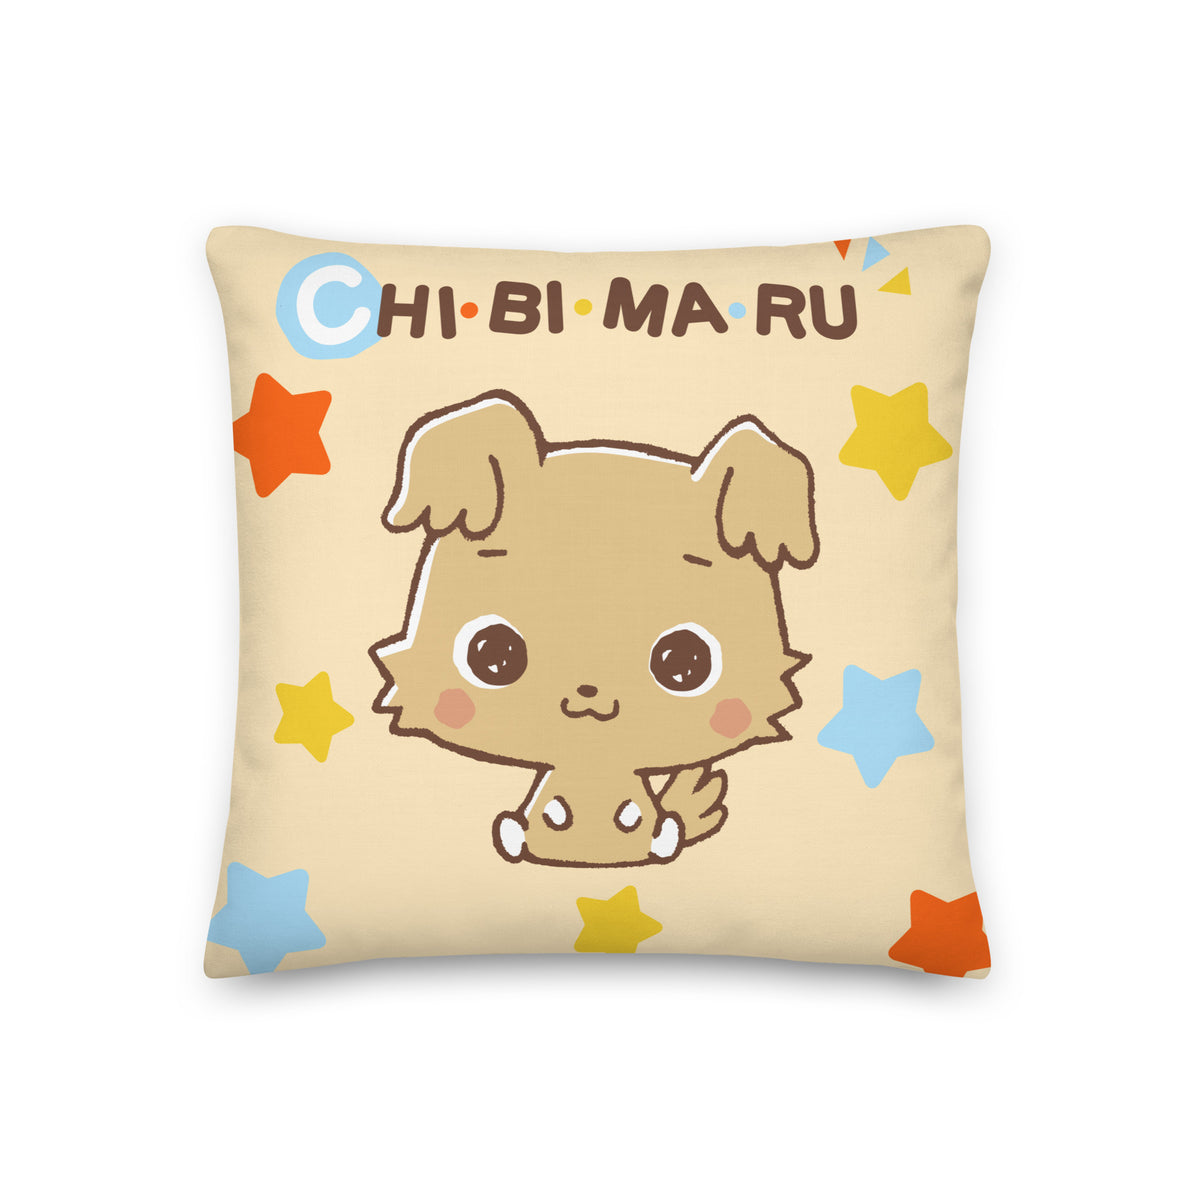 Chibimaru Cheerful Pup 18 Square Pillow